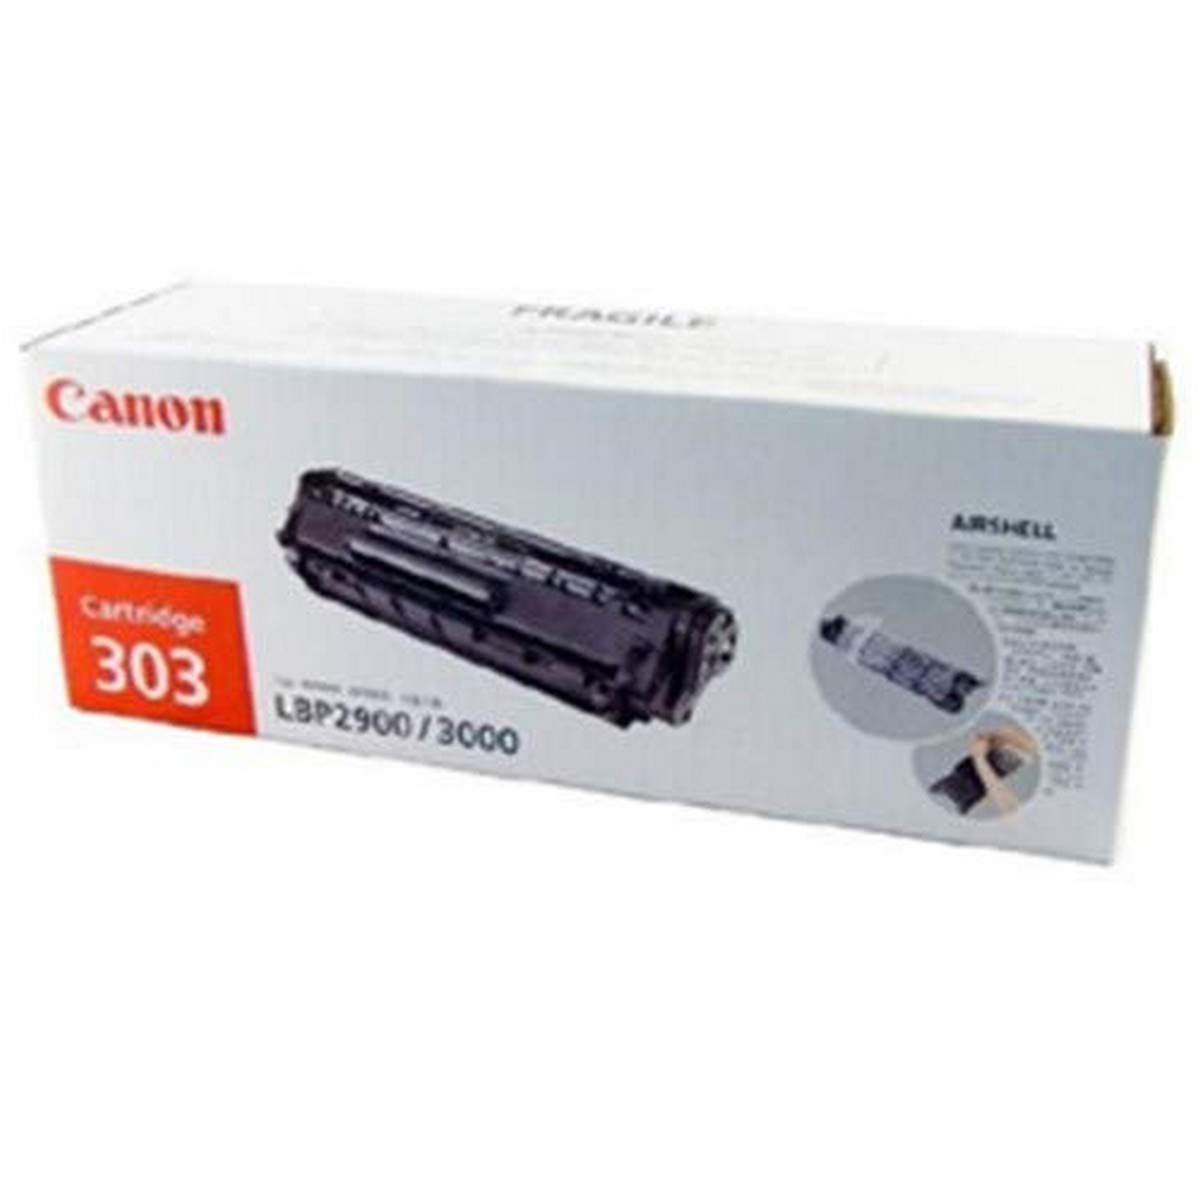 CANON トナーカートリッジ303 純正/LBP3000用 CN-EP303J